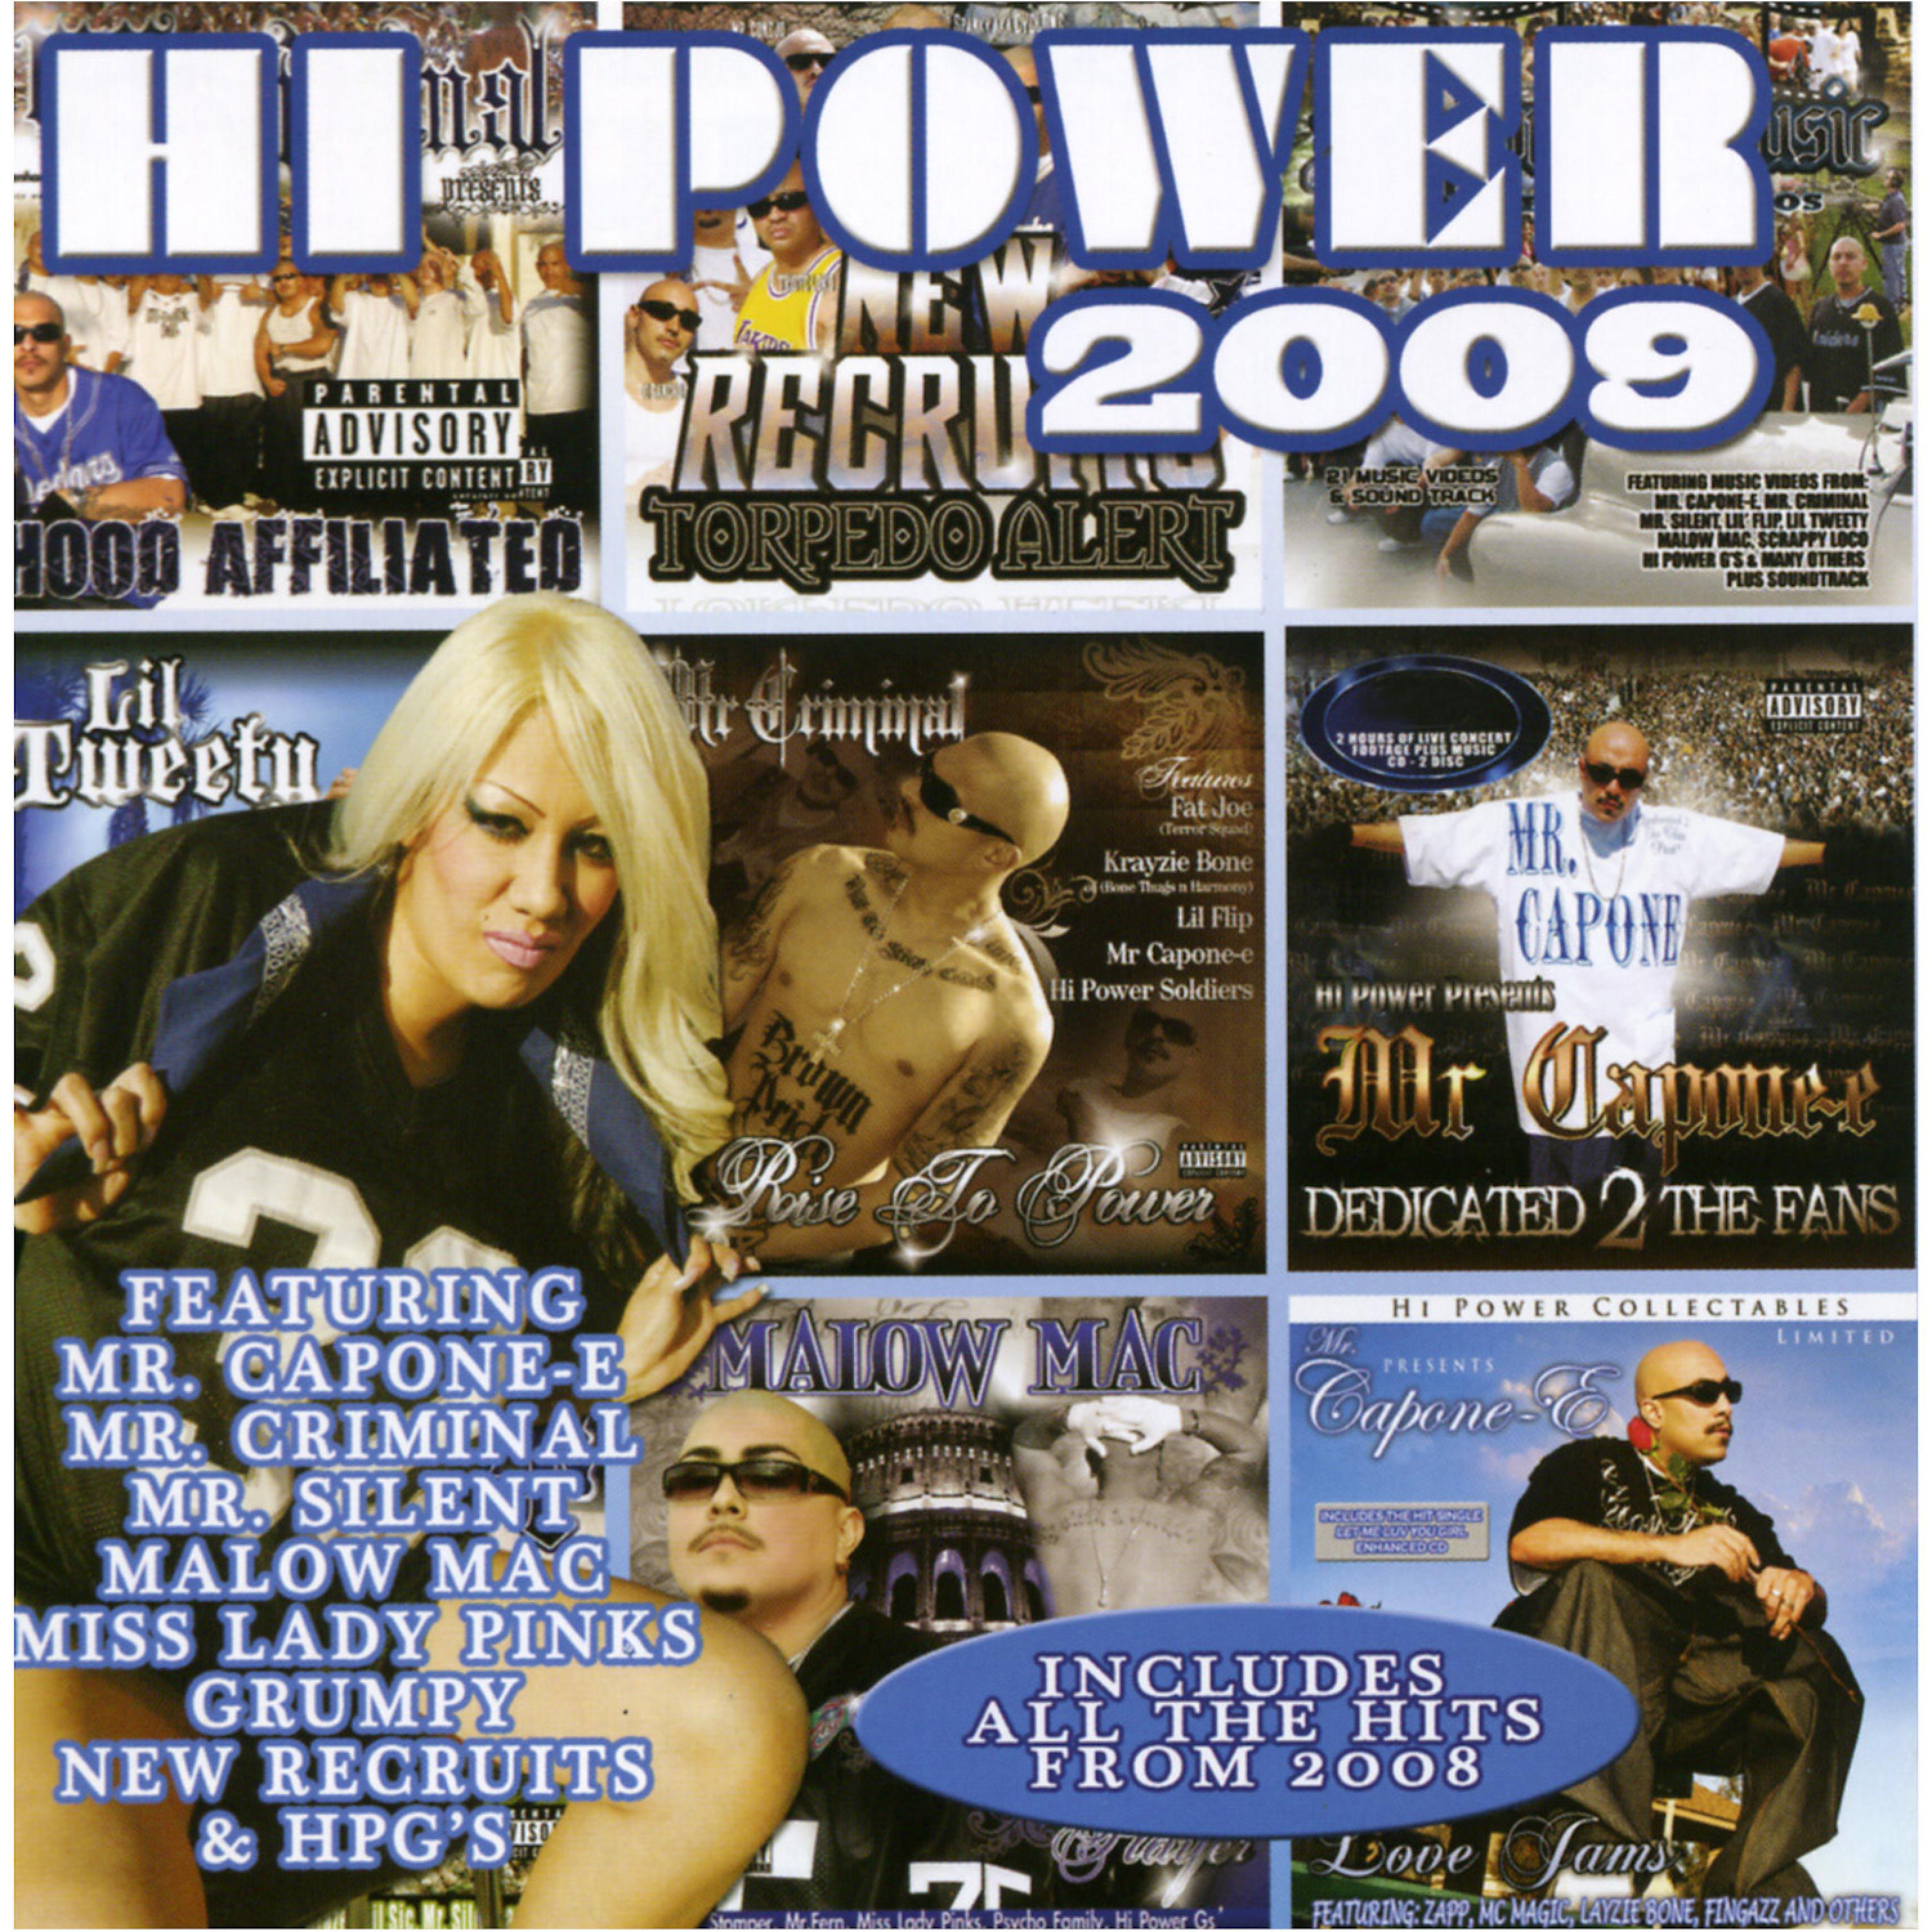 Hi Power 2009